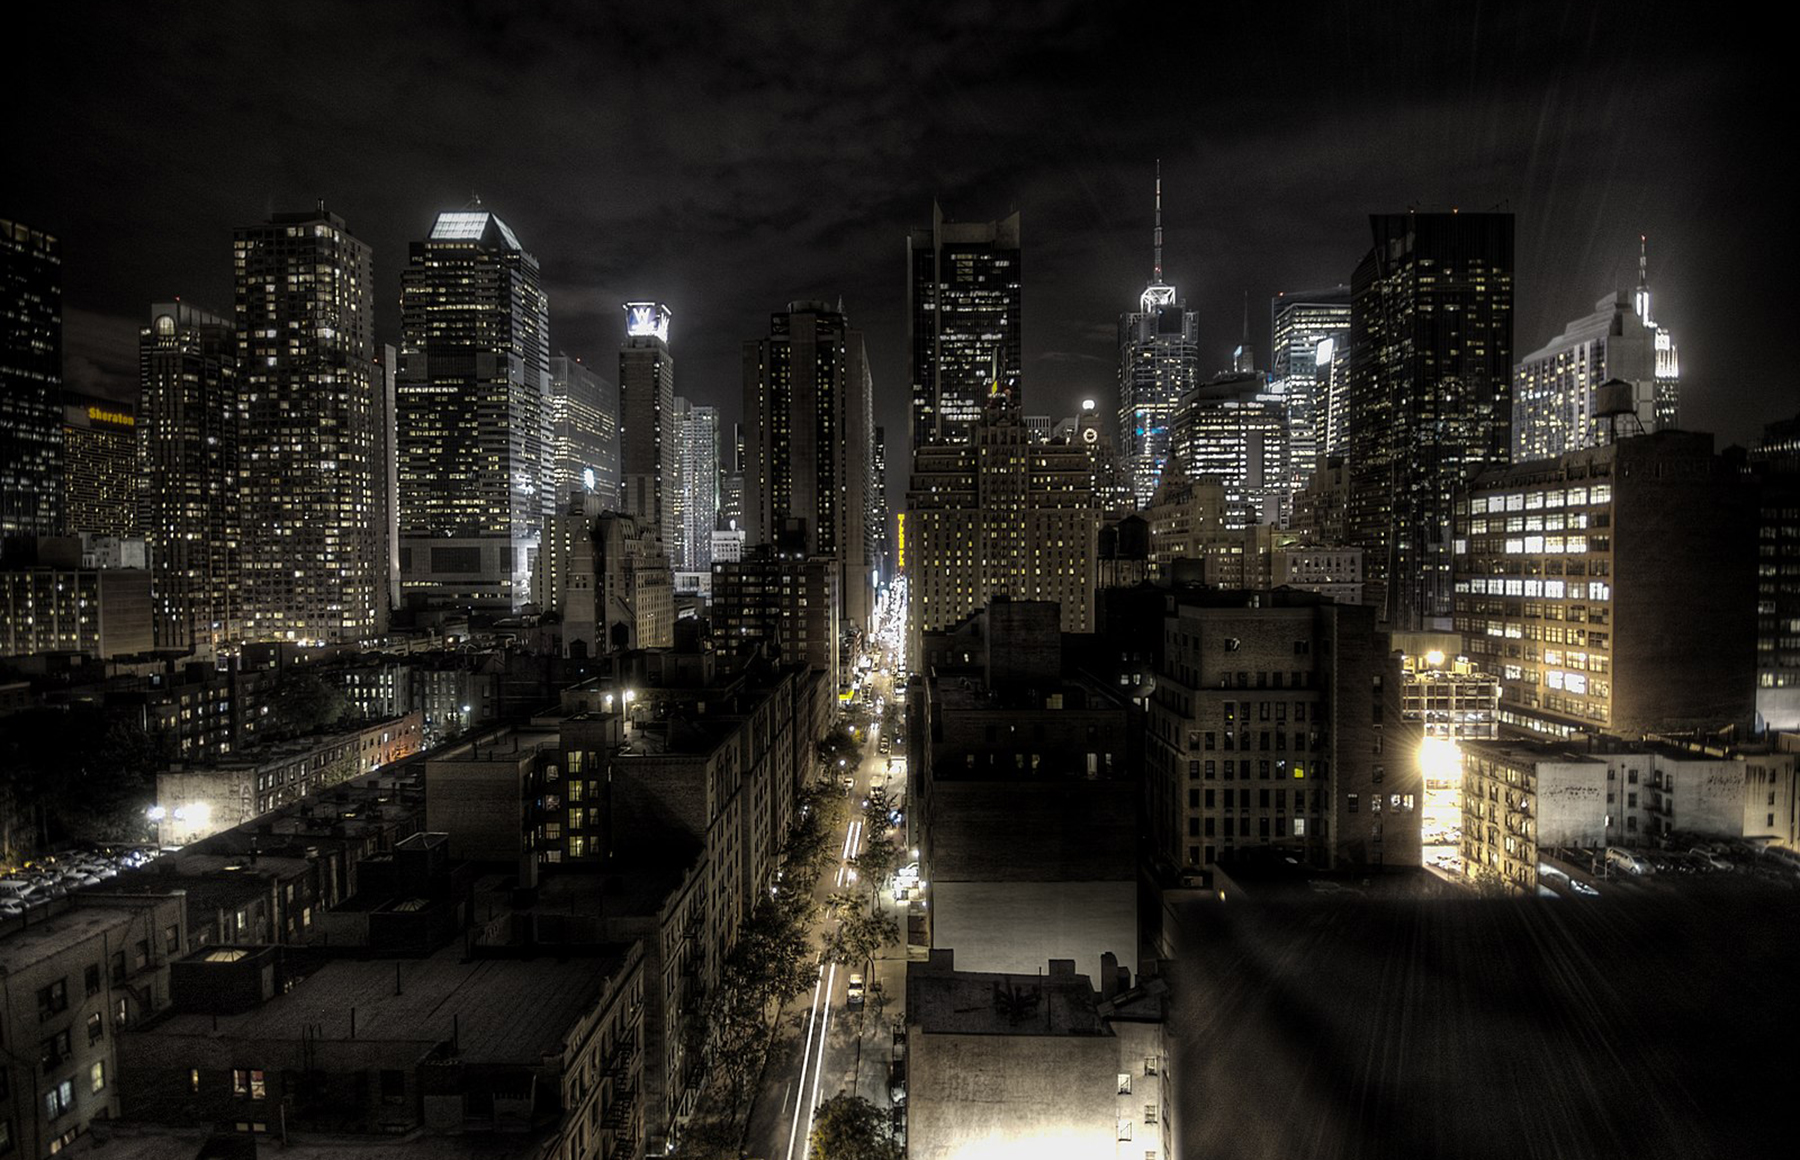 A dark city skyline at night with streetlights illuminating the road - New York